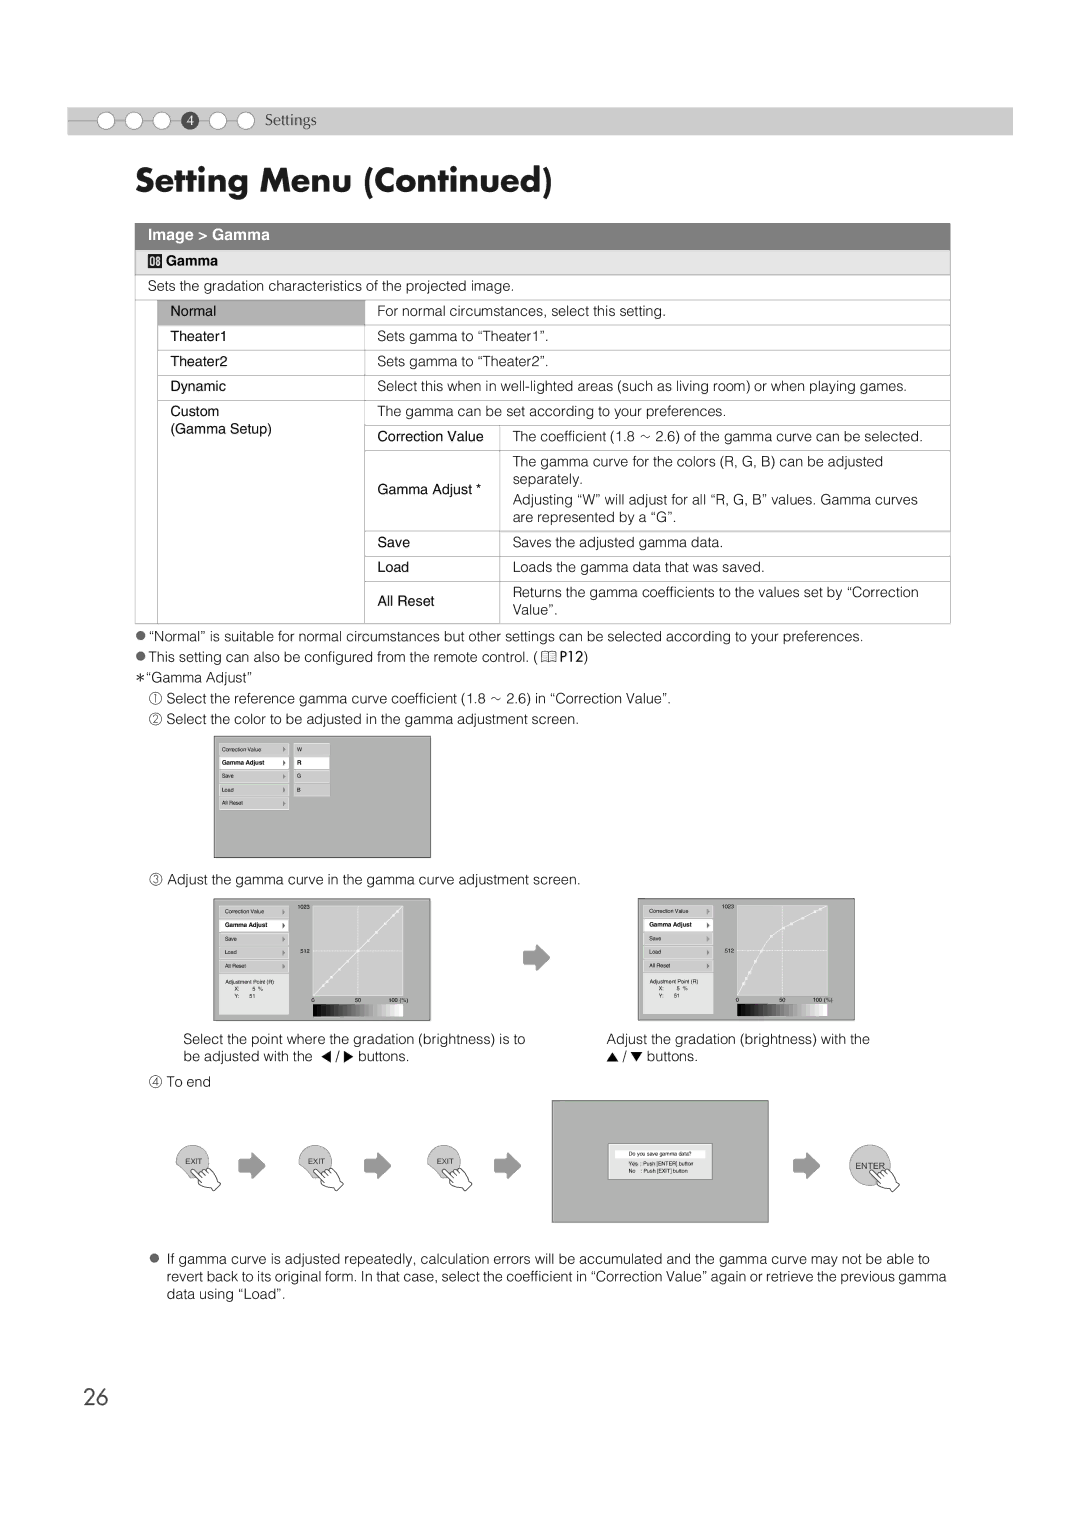 JVC DLA-RS1X manual Image Gamma 